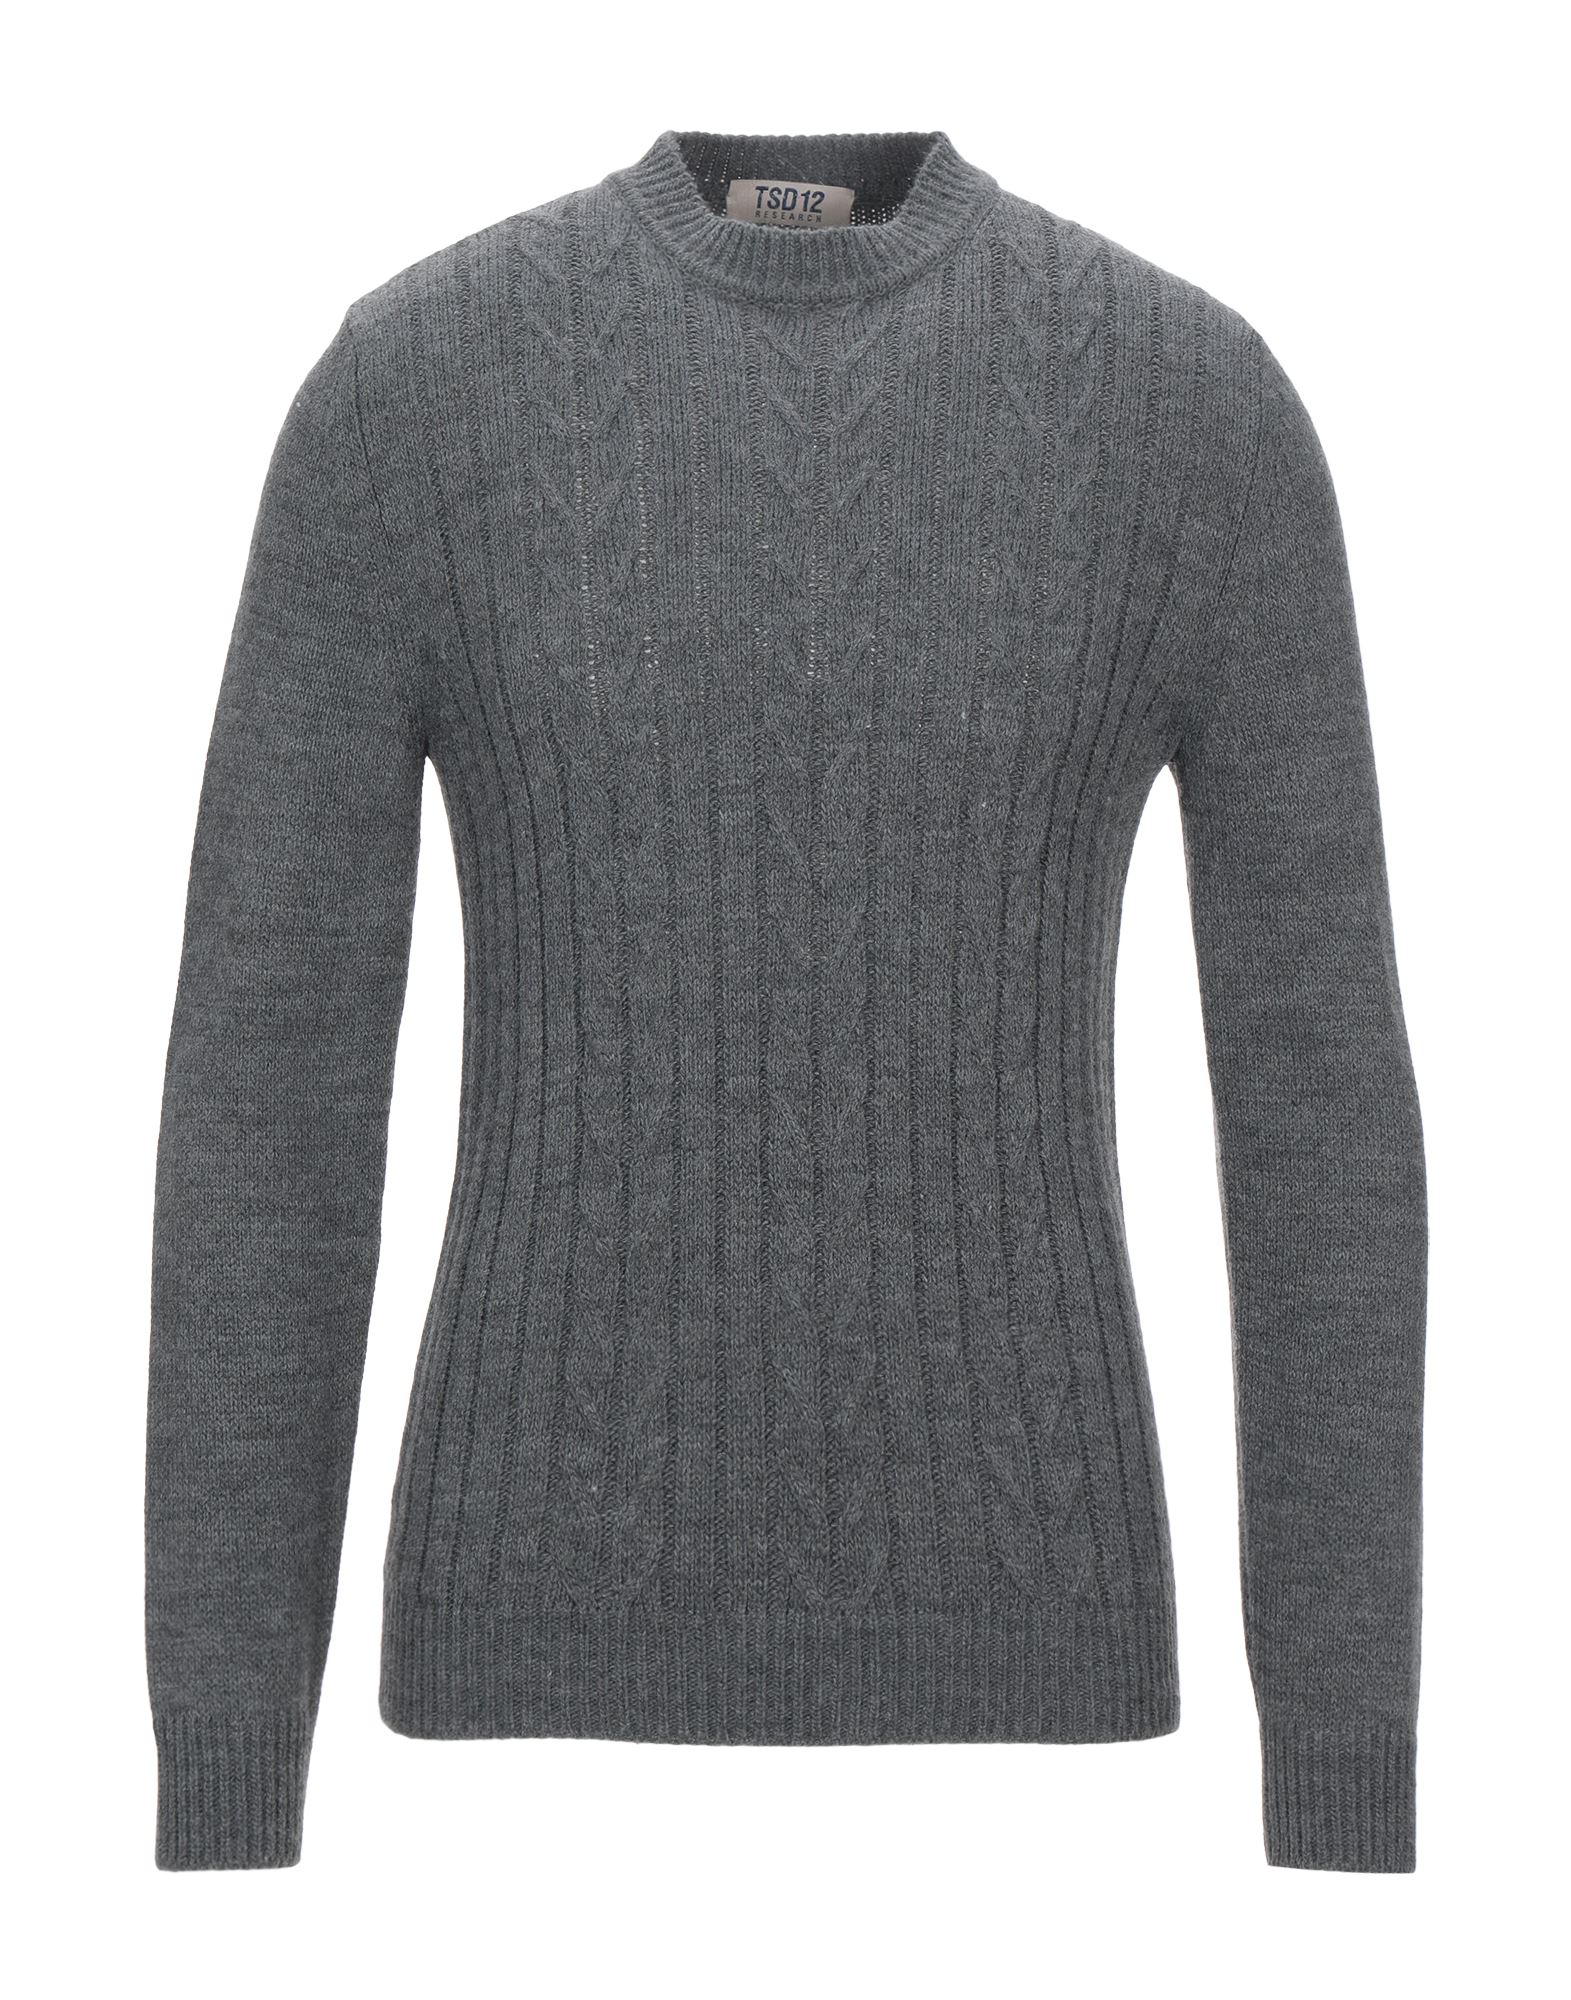 Shop Tsd12 Man Sweater Grey Size Xxl Dralon